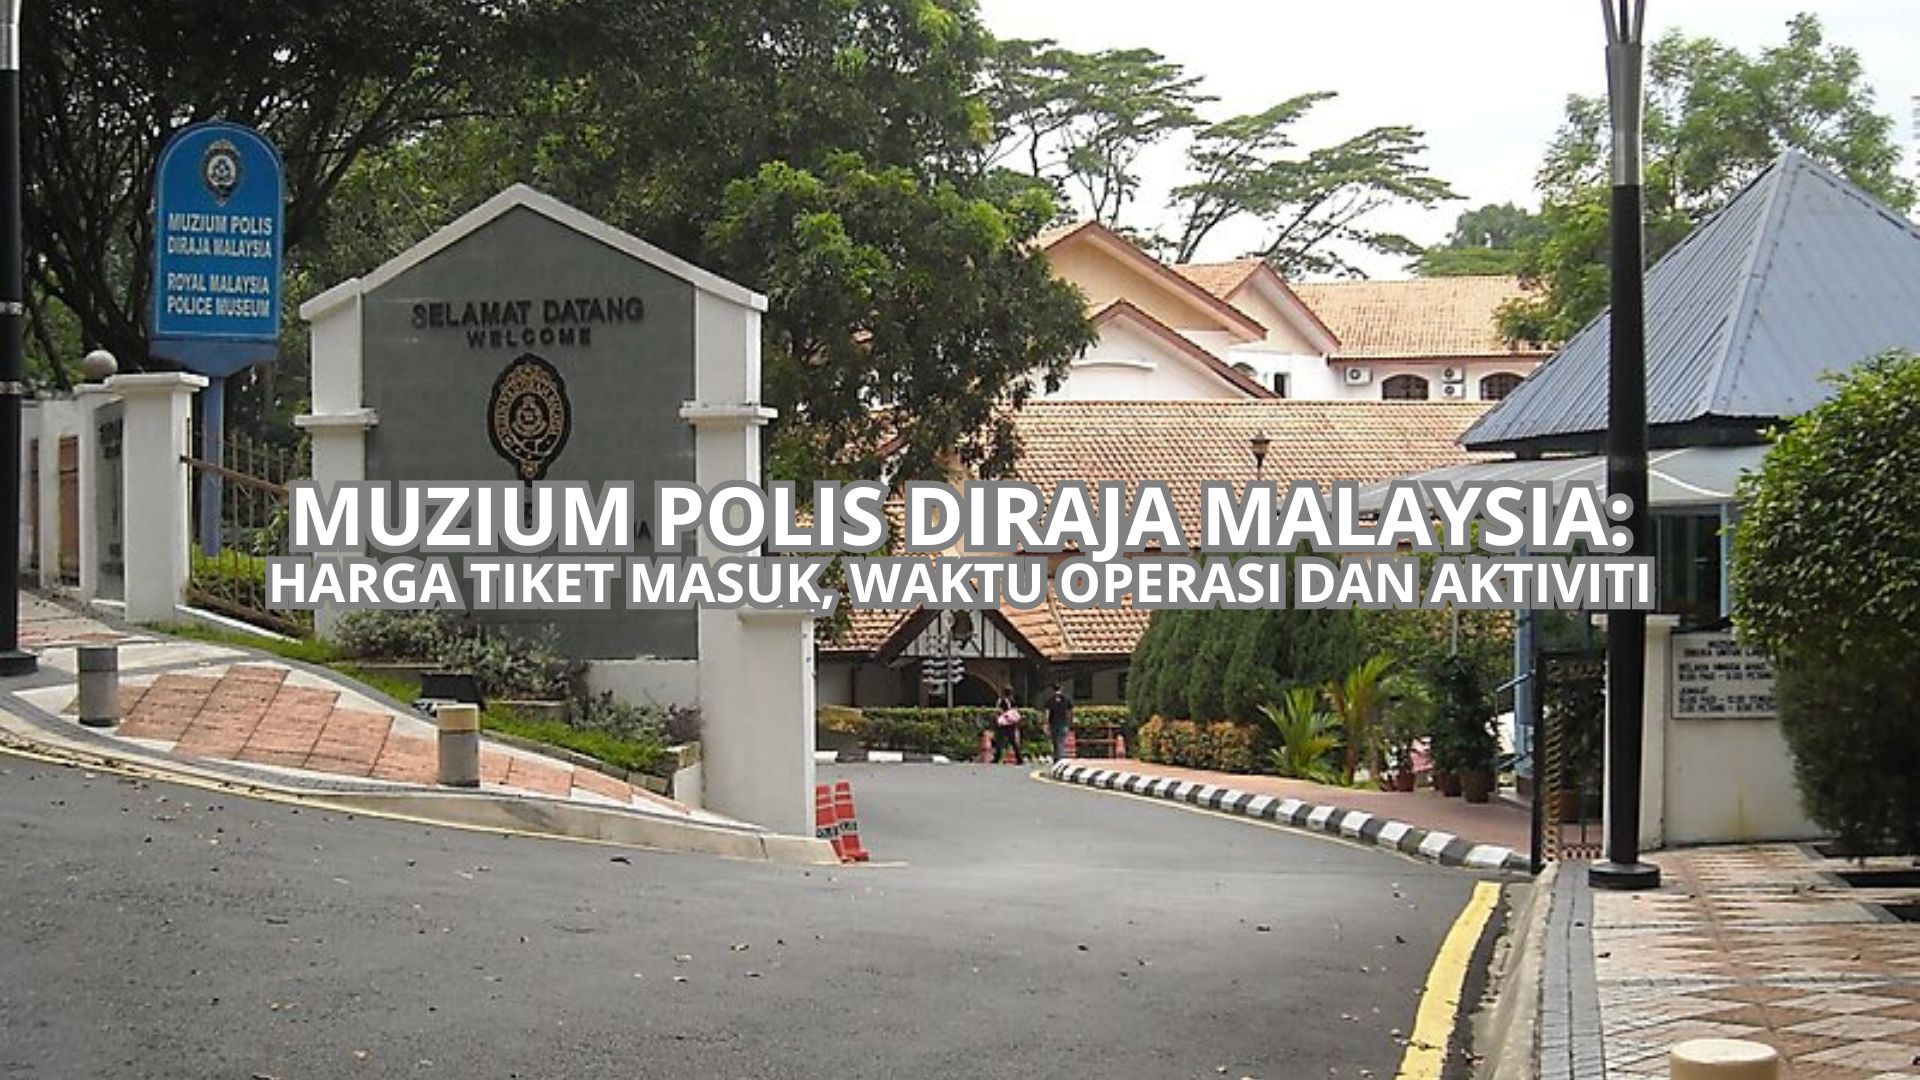 Muzium Polis Diraja Malaysia Cover